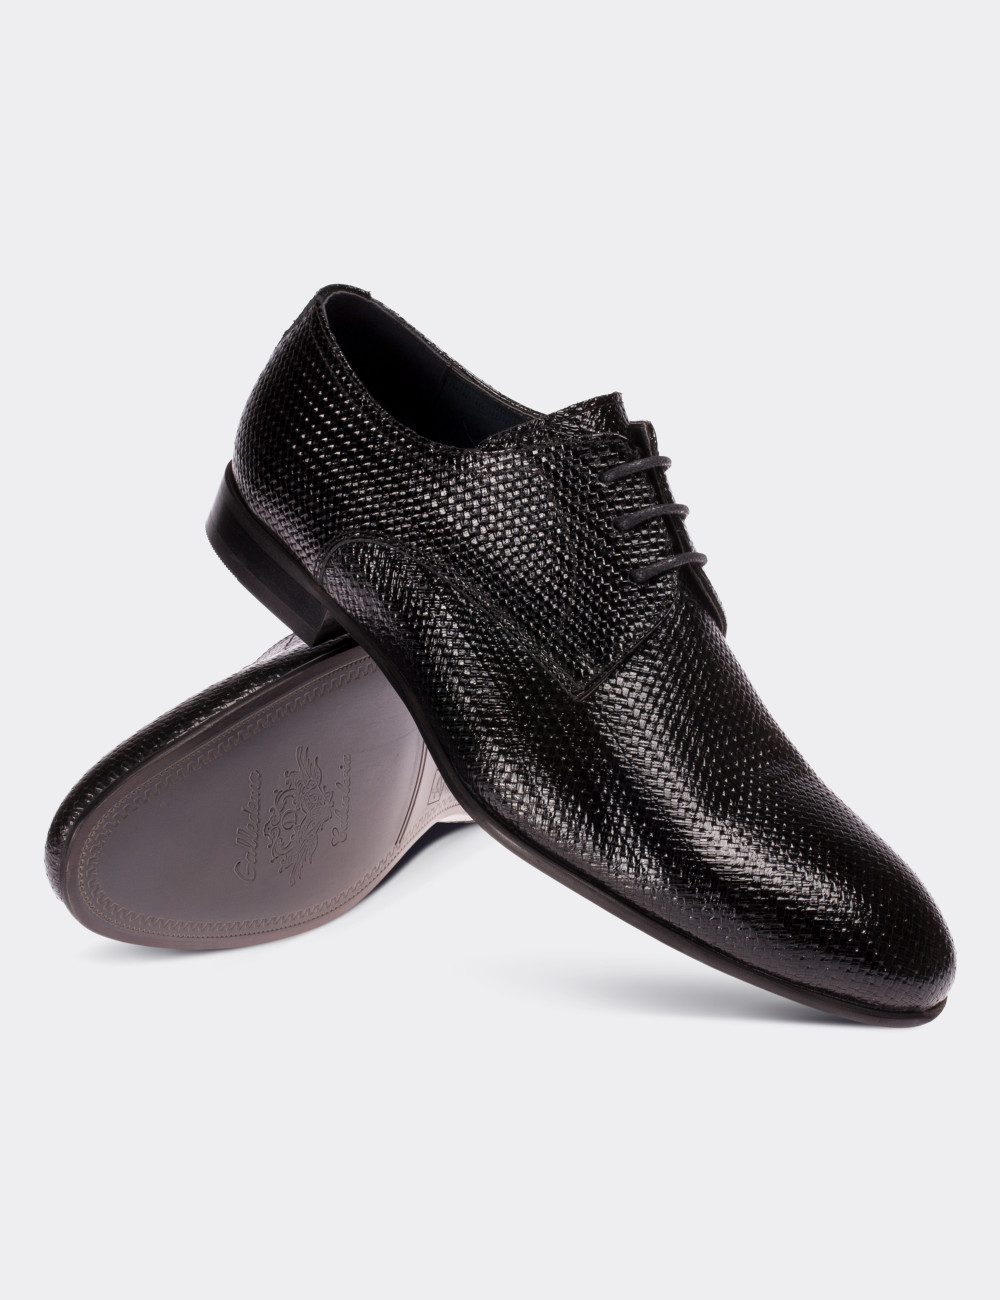 Hakiki Rugan Siyah Klasik Erkek Ayakkabı - 00479MSYHM11